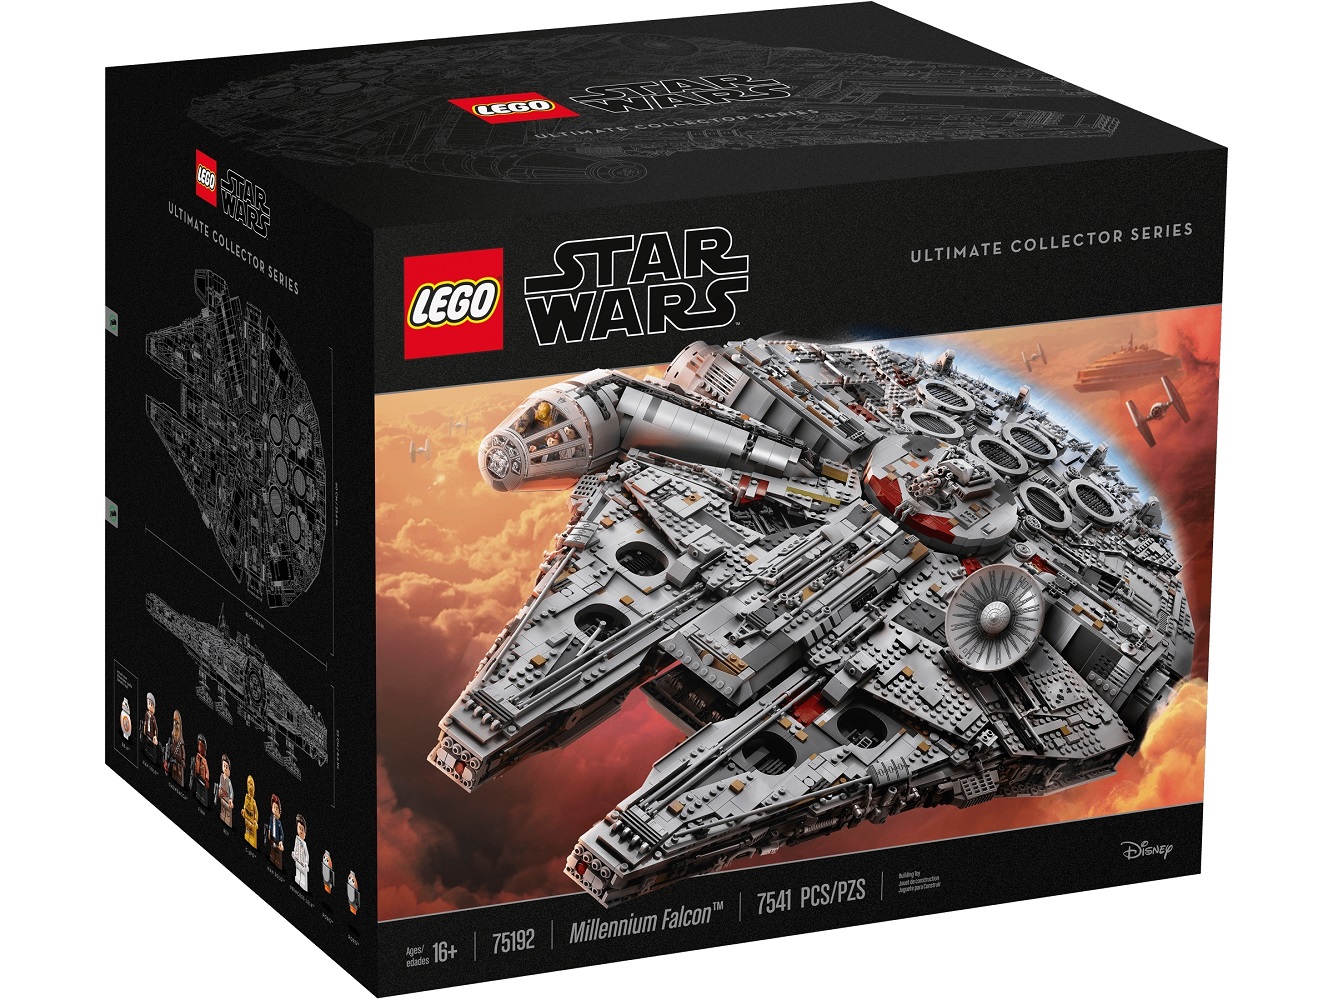 Lego Star Wars Millennium Falcon Ultimeate Collectors Series 